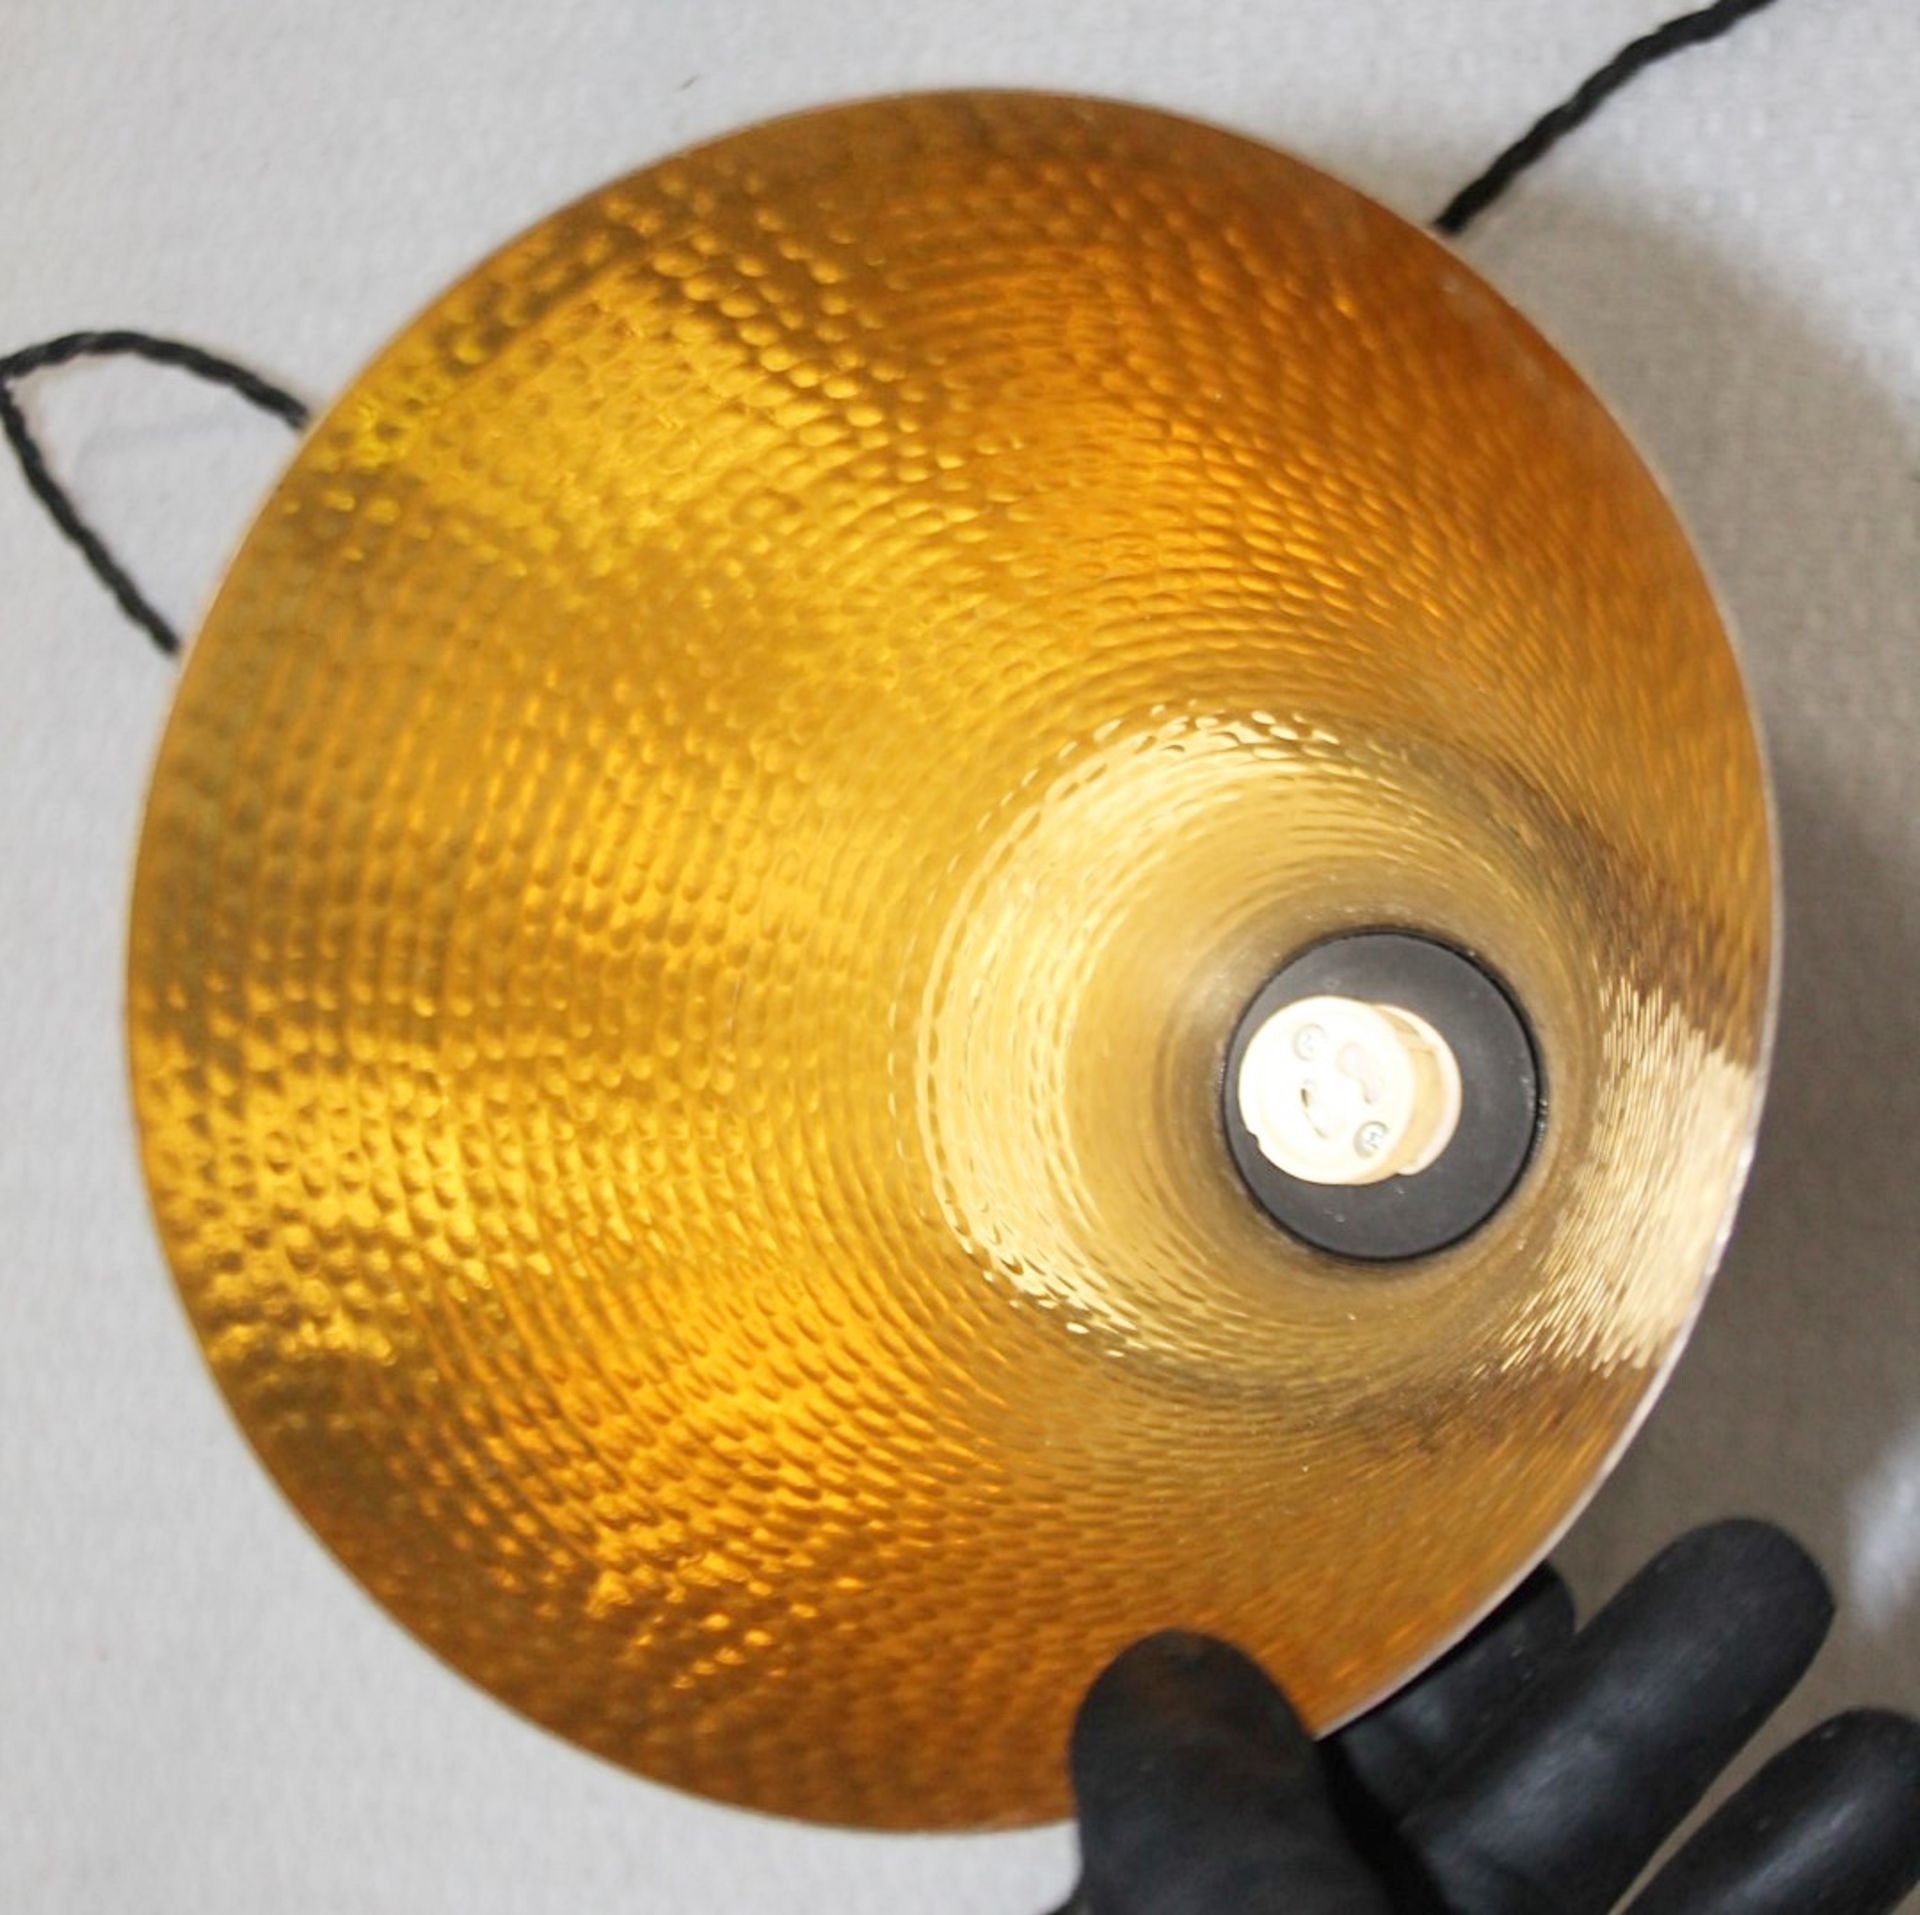 A Pair Of TOM DIXON Pendant Lamps - Total Original RRP £878.00 - Ref: GEN570+571 WH2 - CL802 UX - - Image 3 of 5